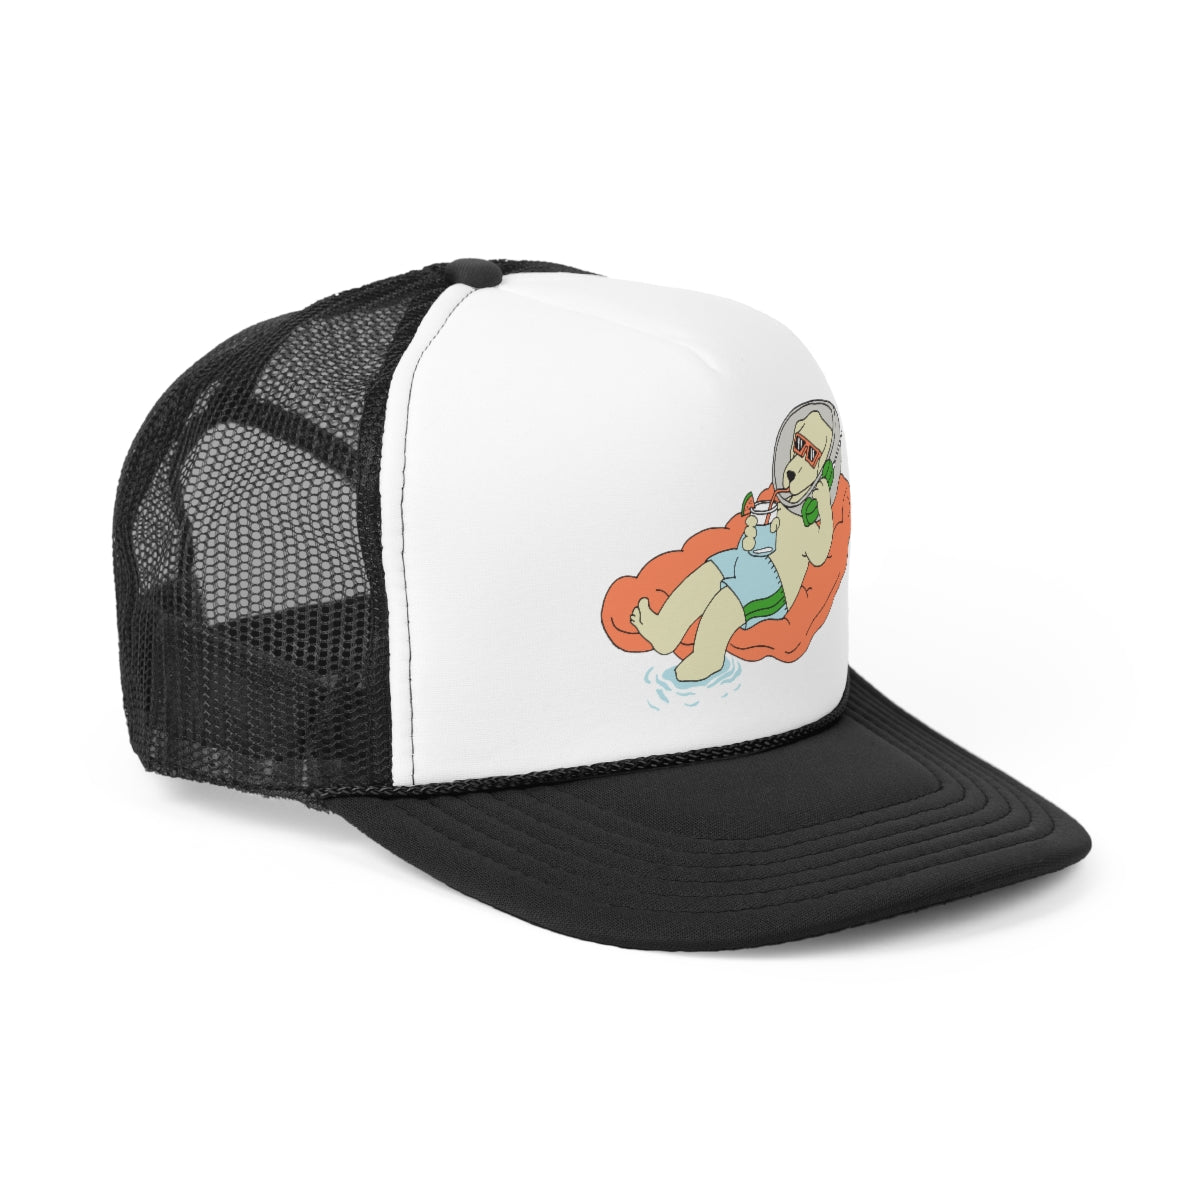 New Cone - Who Dis? Trucker Hat